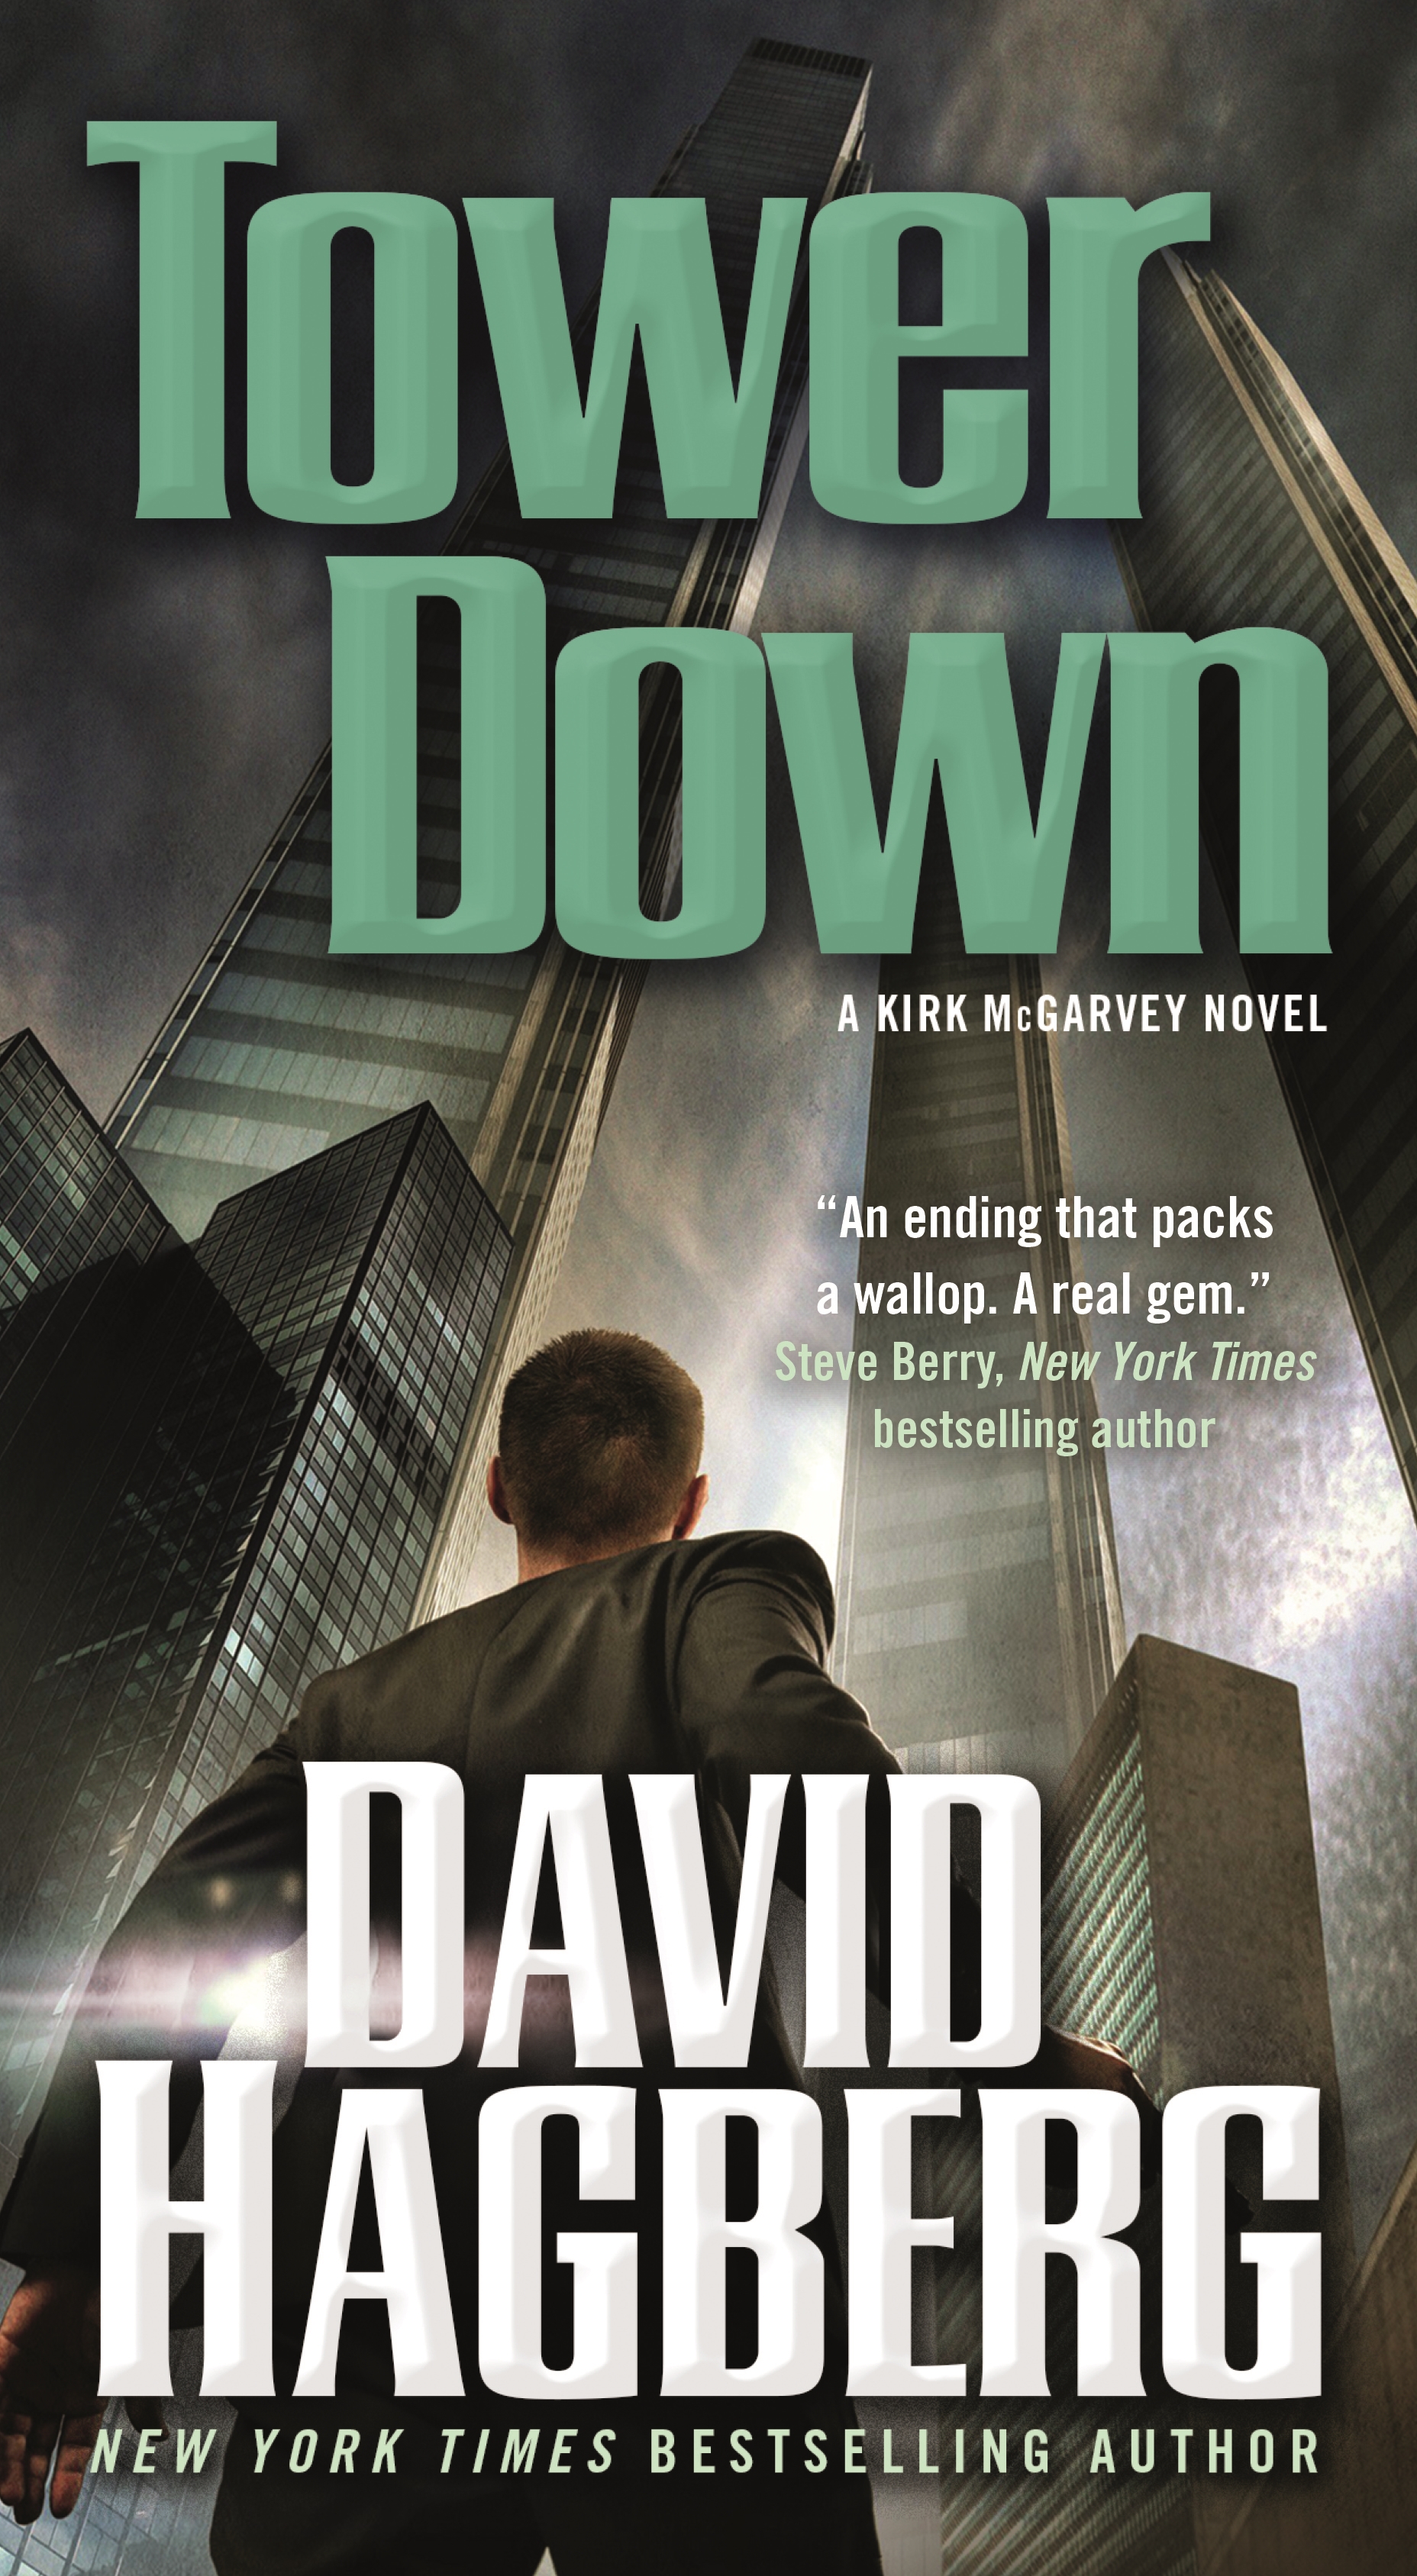 Tower Down : A Kirk McGarvey Novel by David Hagberg